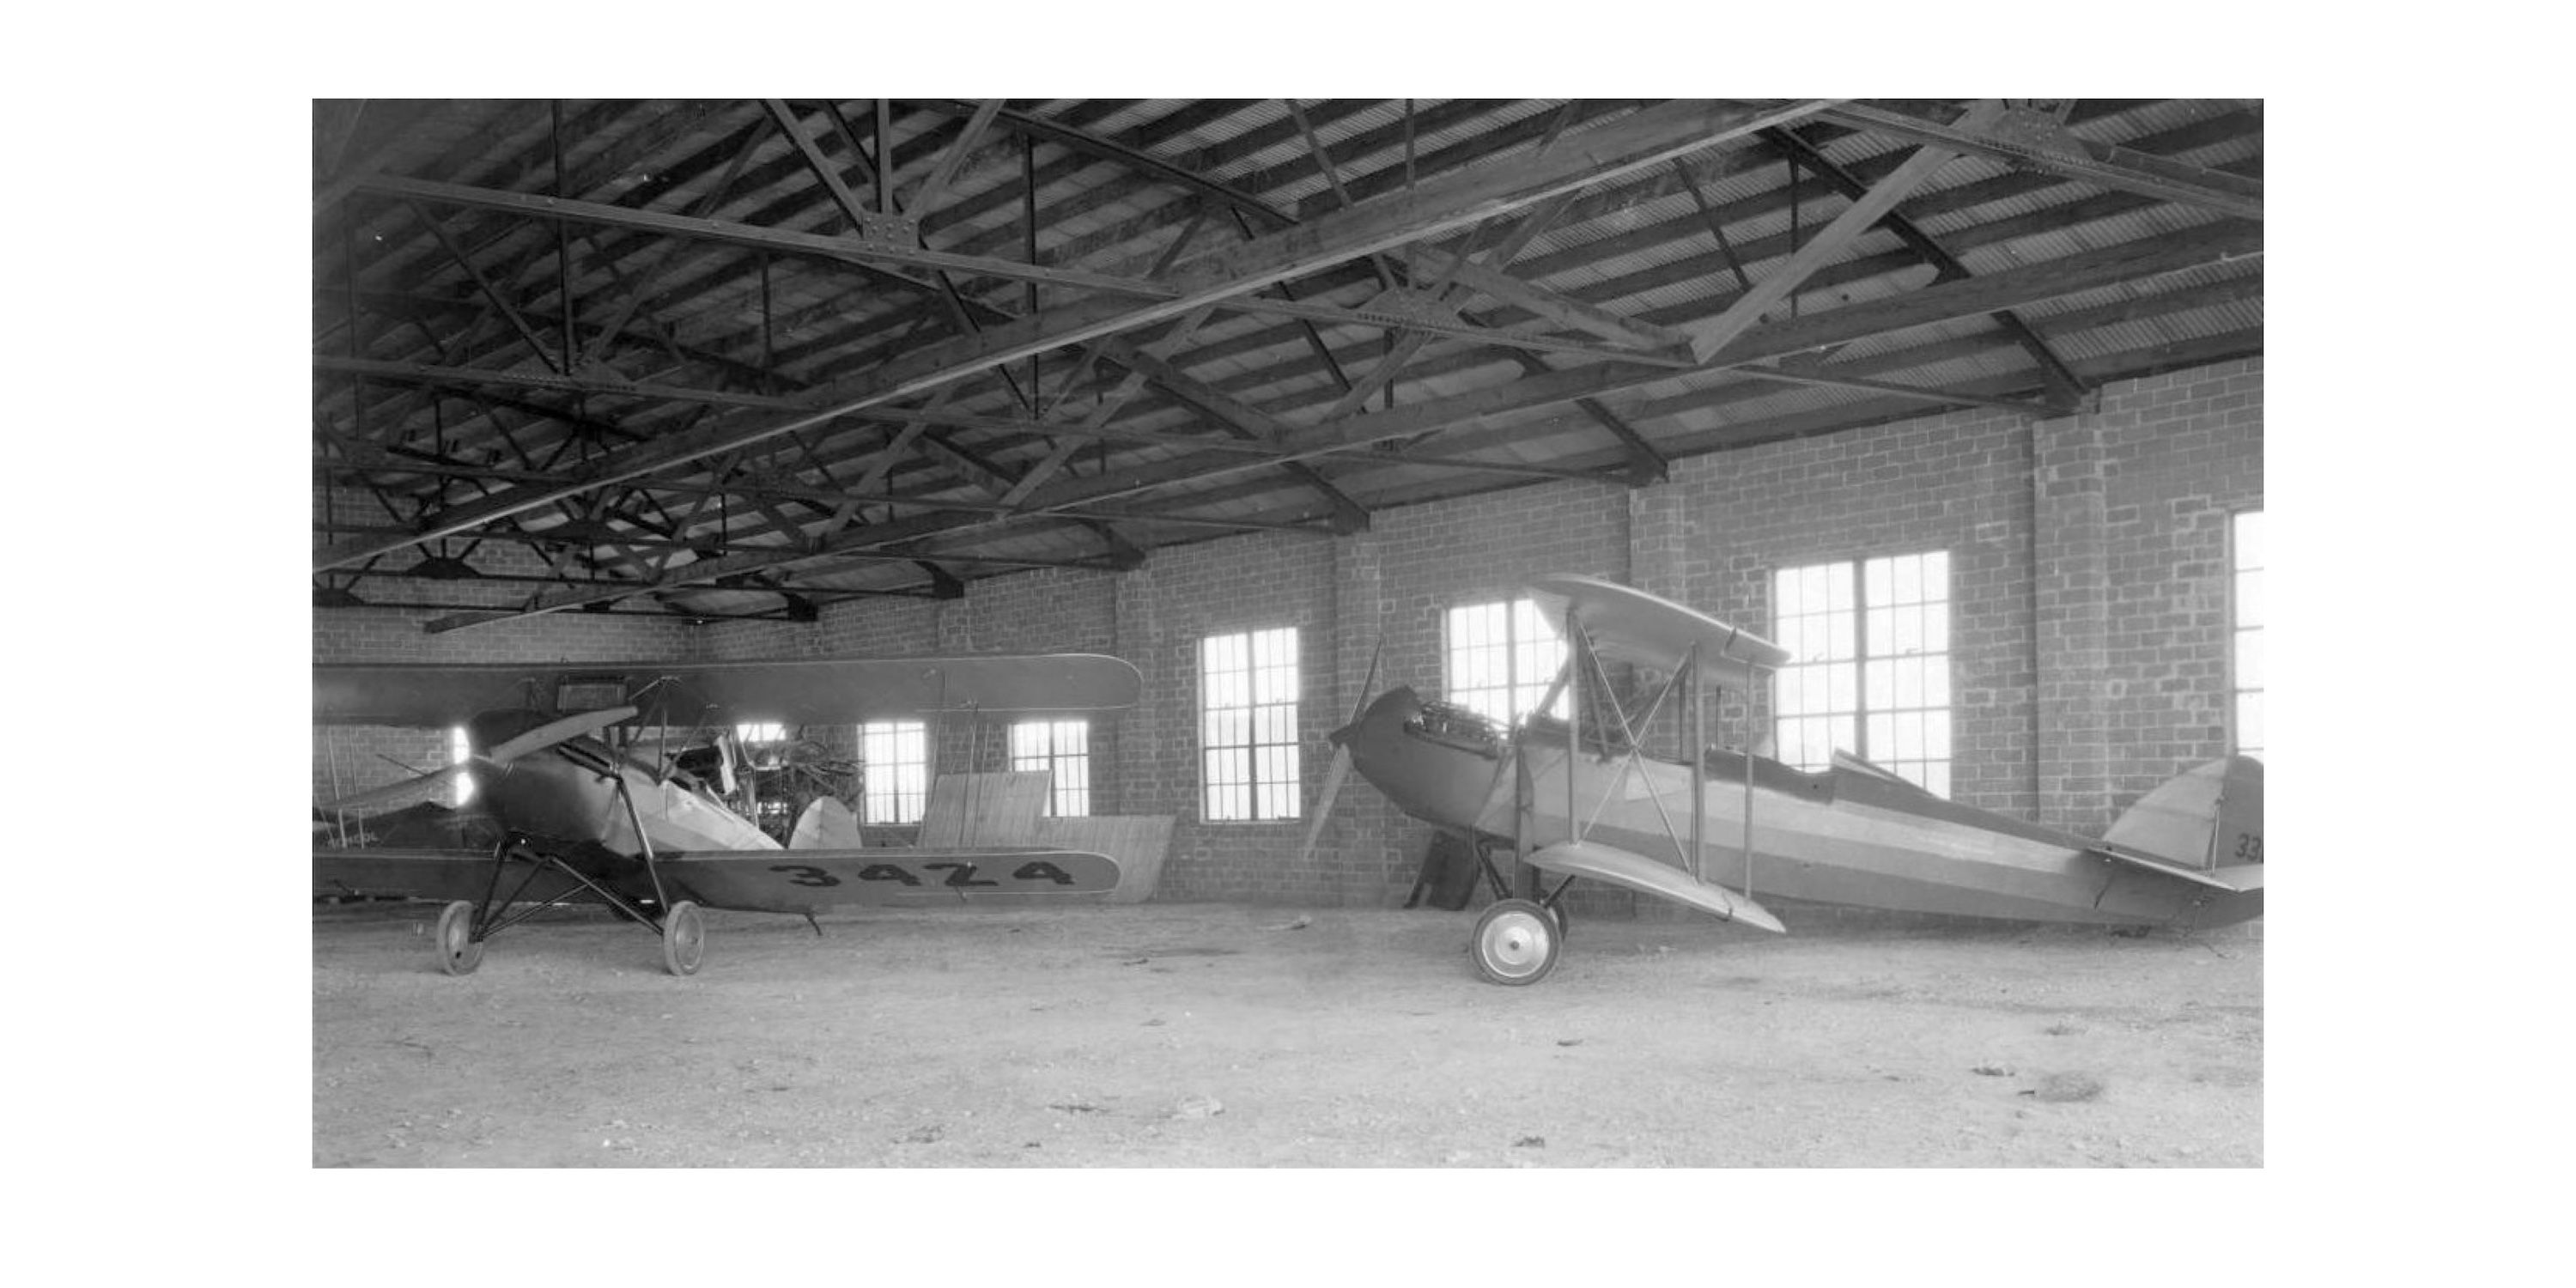 Hangar Interior Vintage Image 3000x1500px.jpg